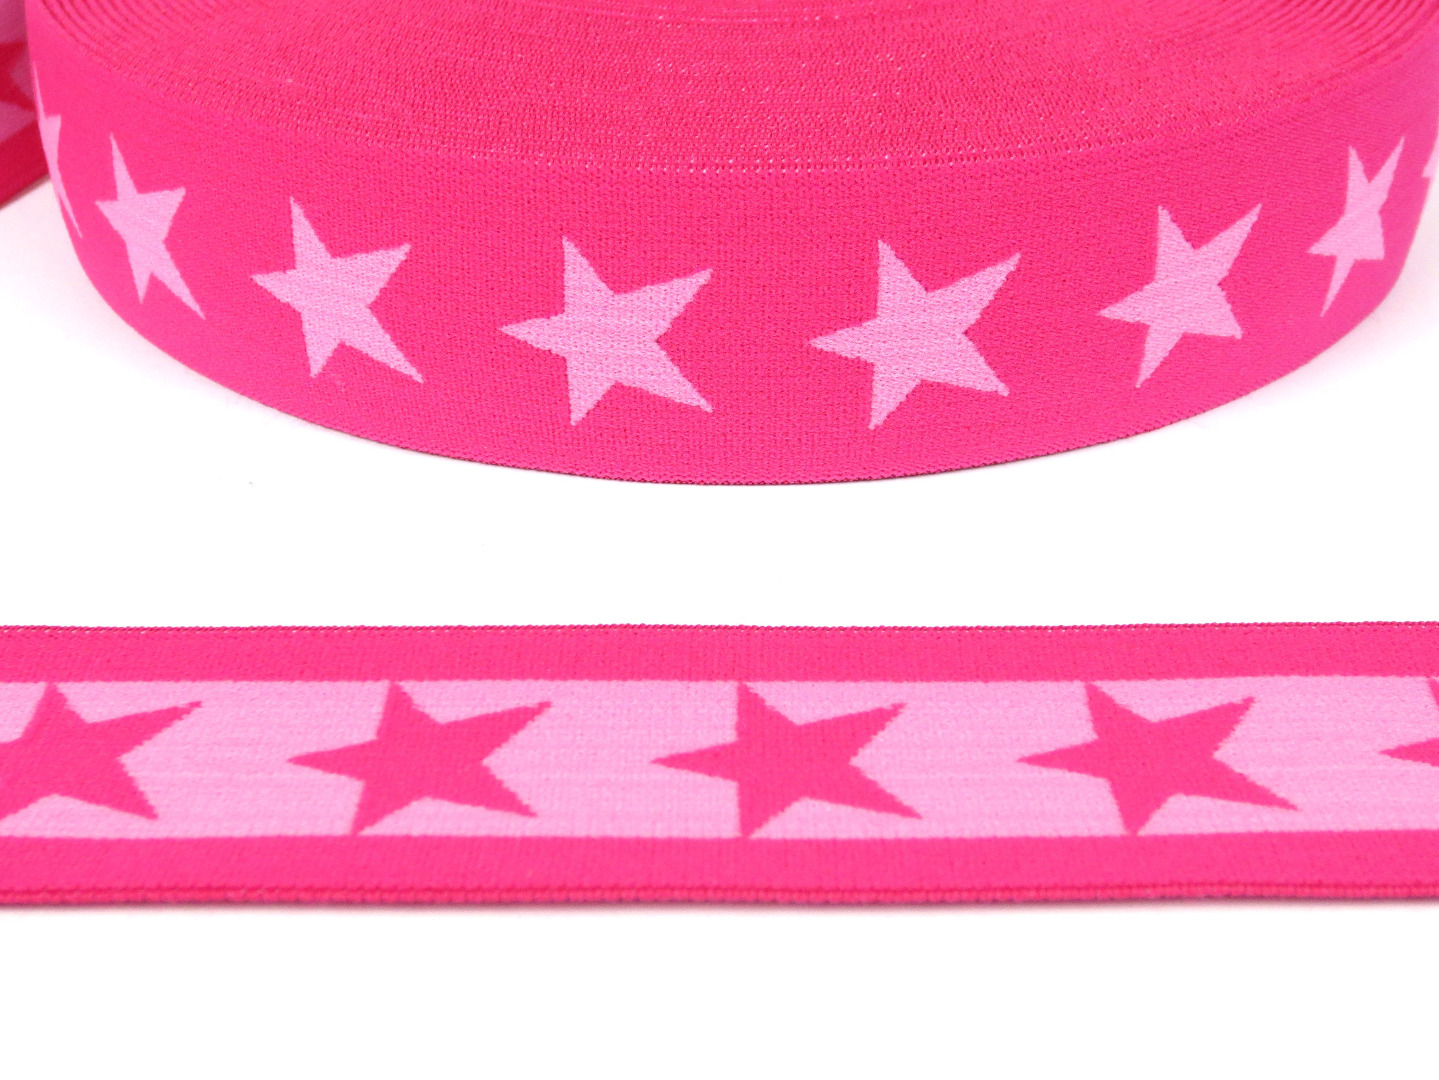 Gummiband Sterne - dunkelpink-rosa - 4 cm Breit